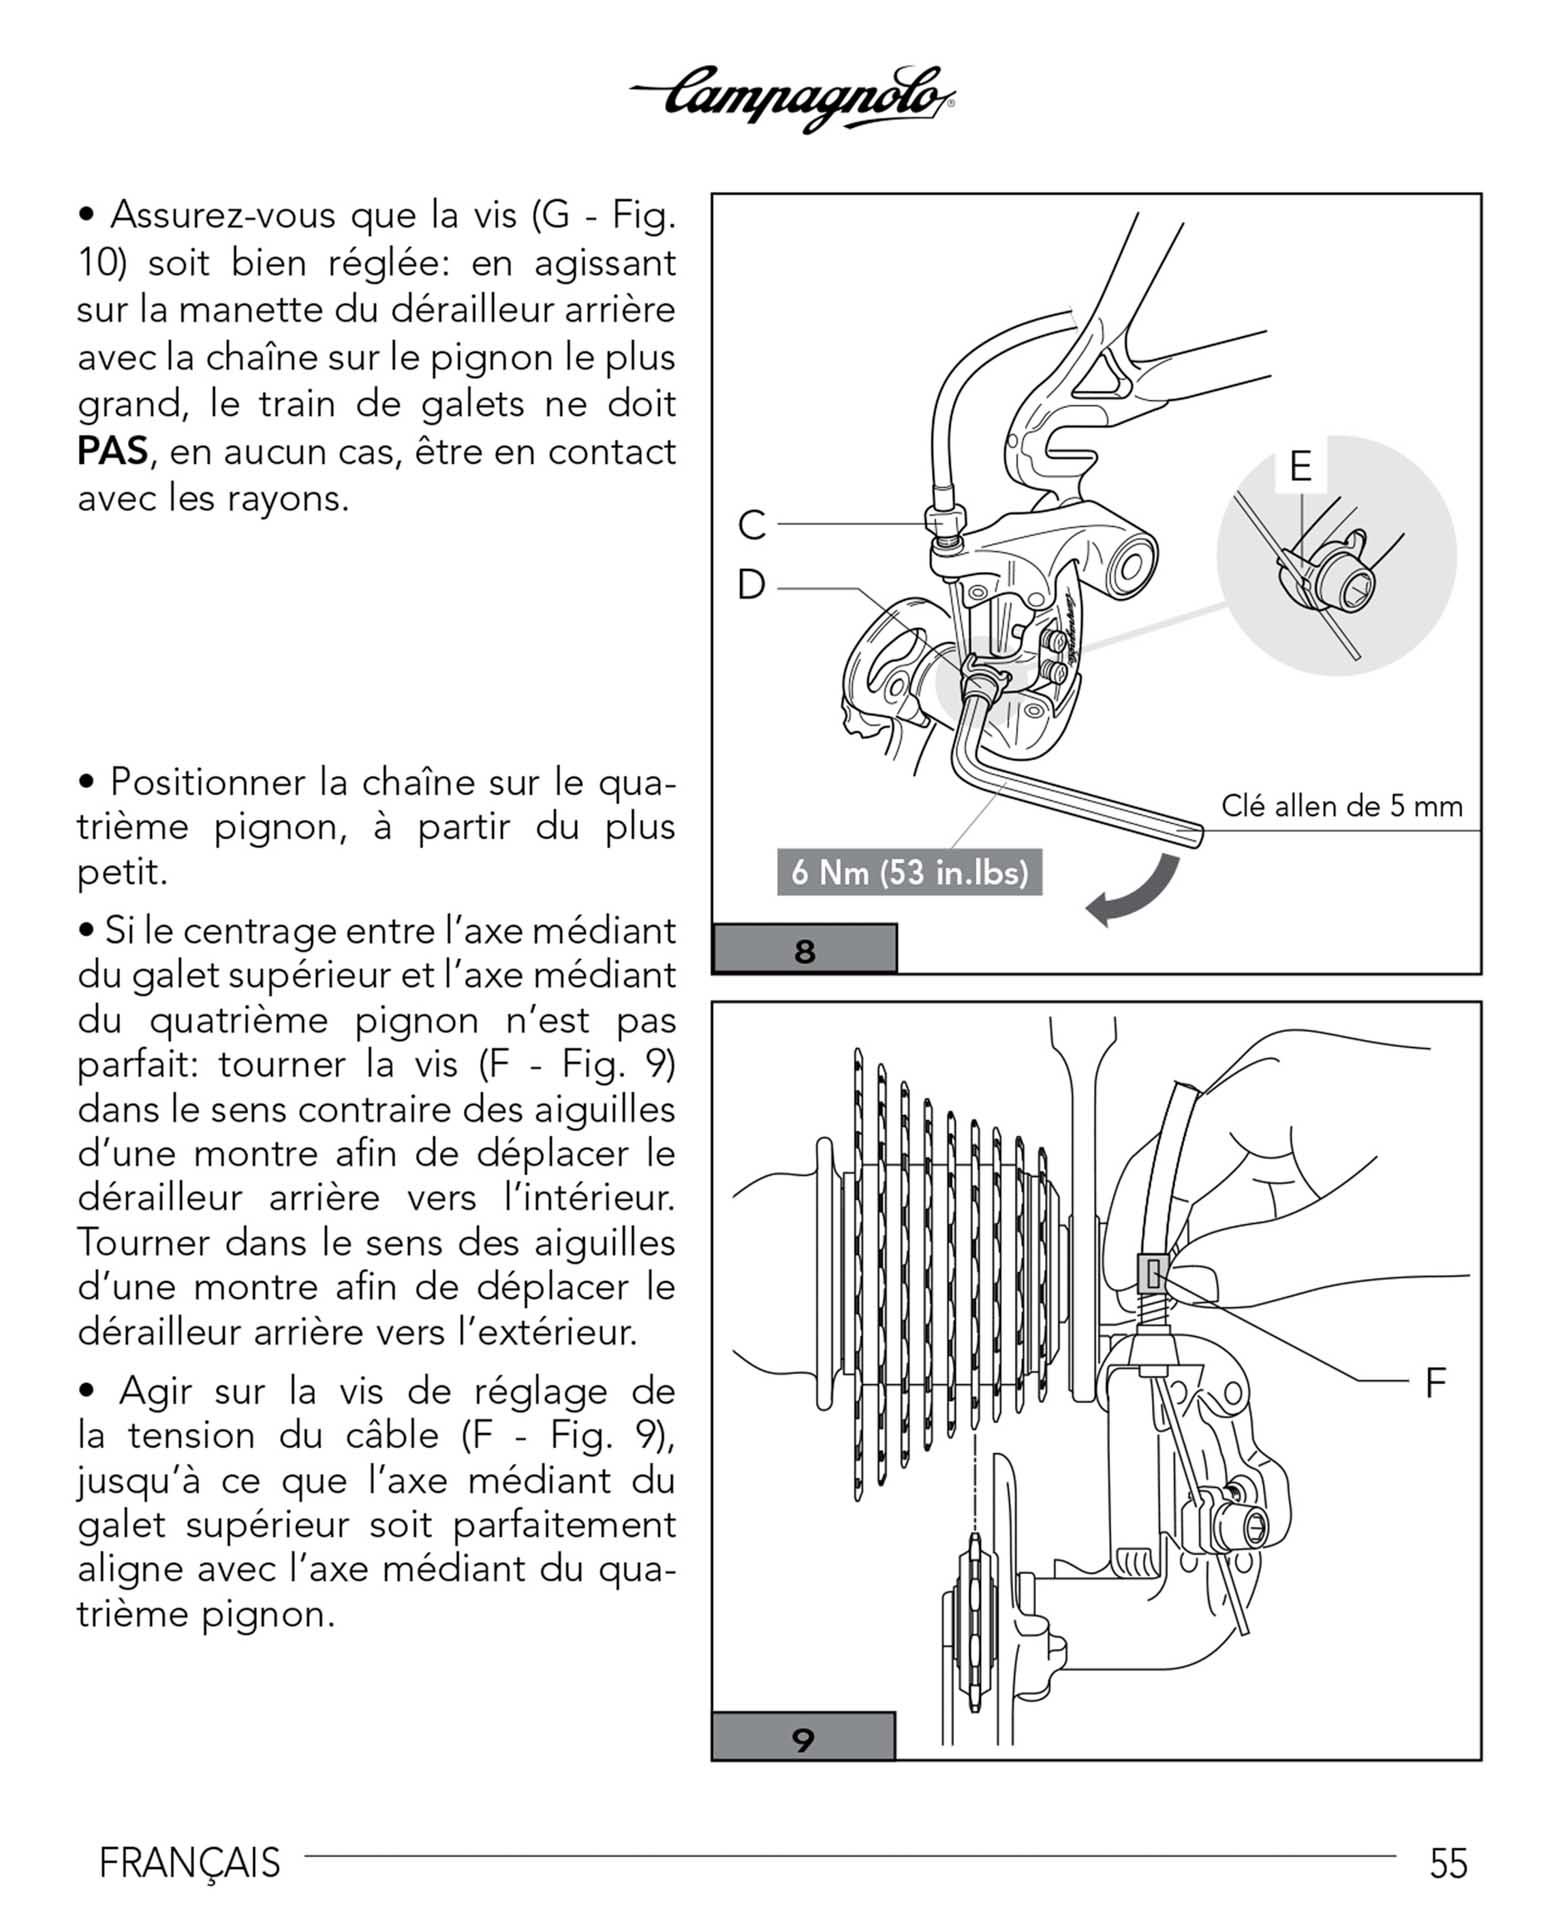 Campagnolo instructions - 7225475 Rear Der Usr Man ('01/2015') page 055 main image